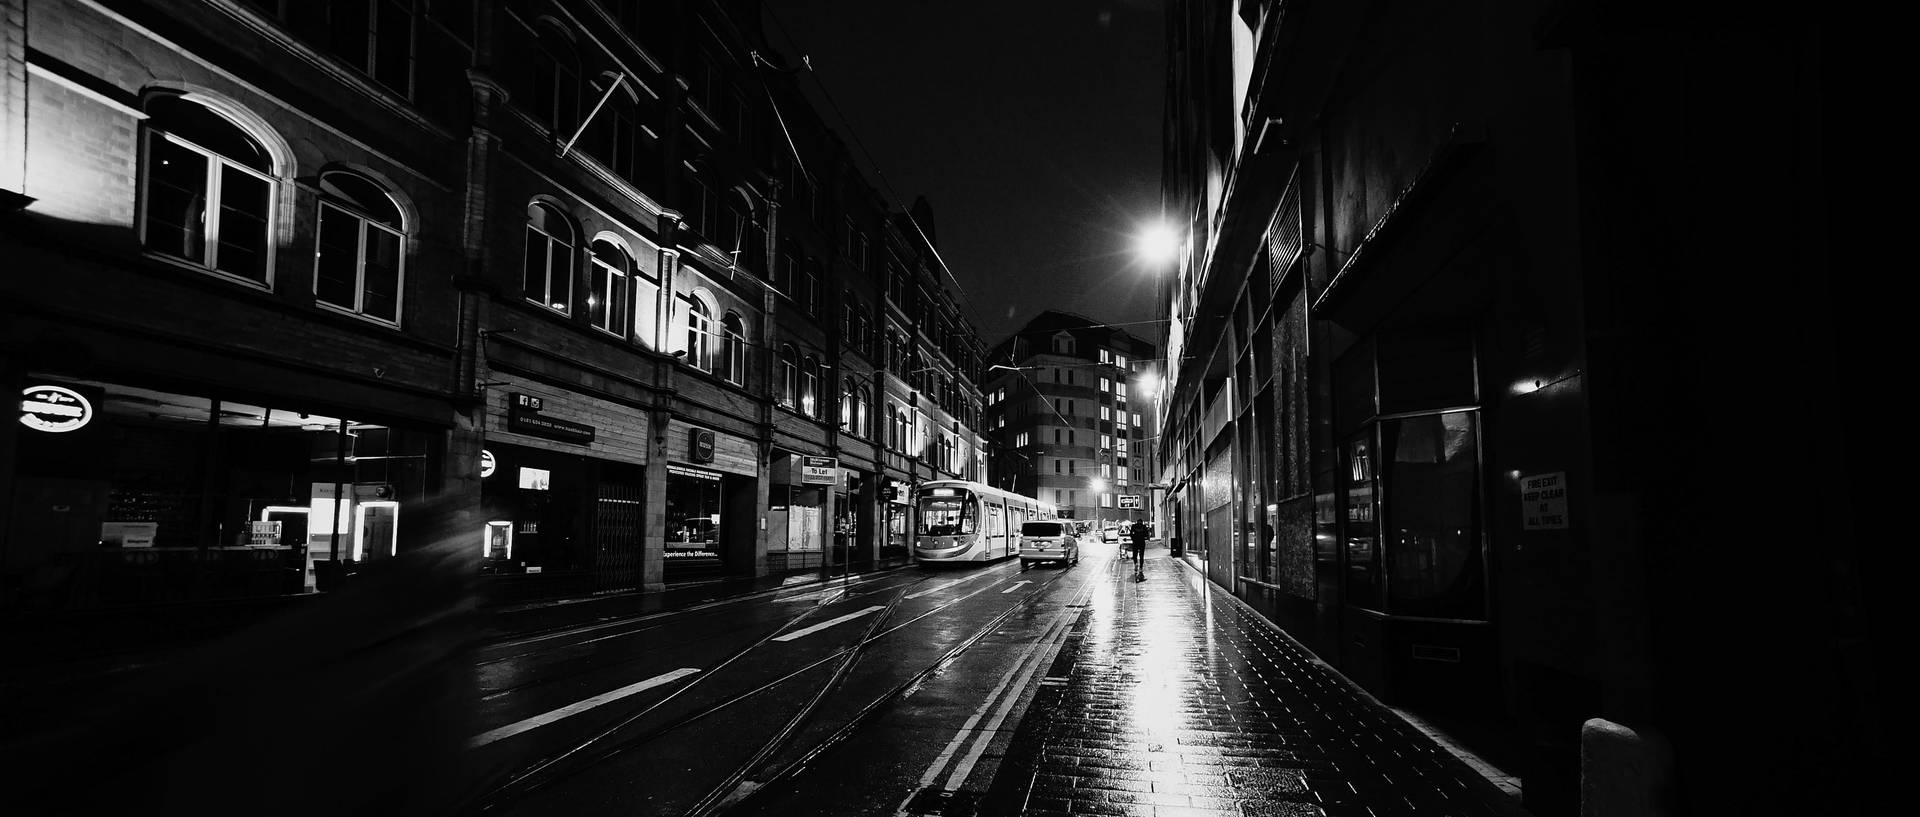 Birmingham On A Dark Night Background